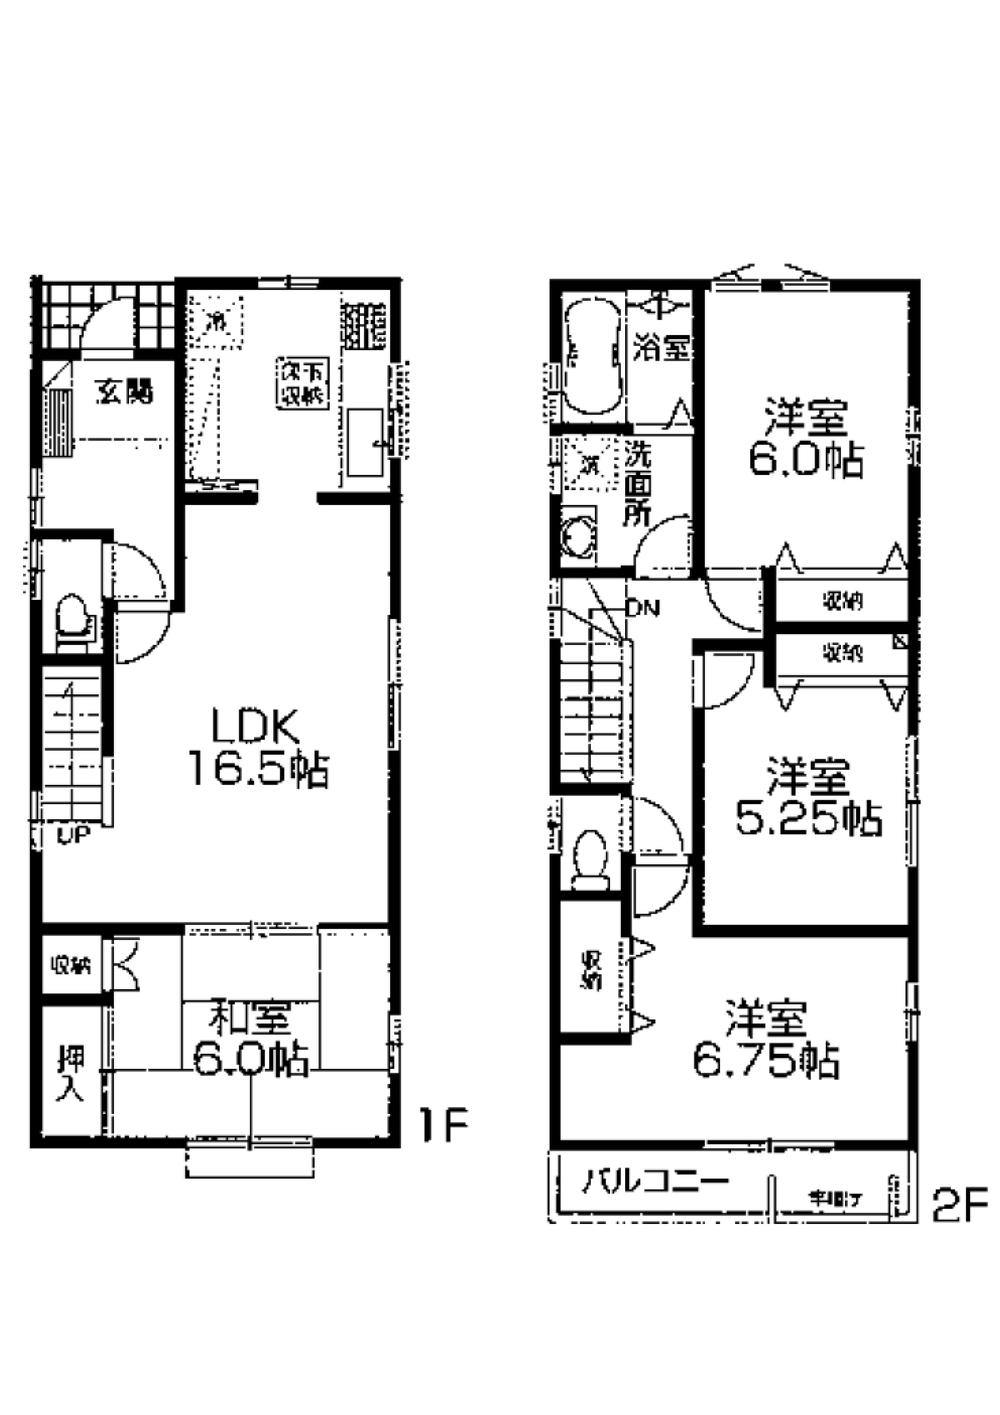 Floor plan. 28,300,000 yen, 4LDK, Land area 127.42 sq m , Building area 97.7 sq m